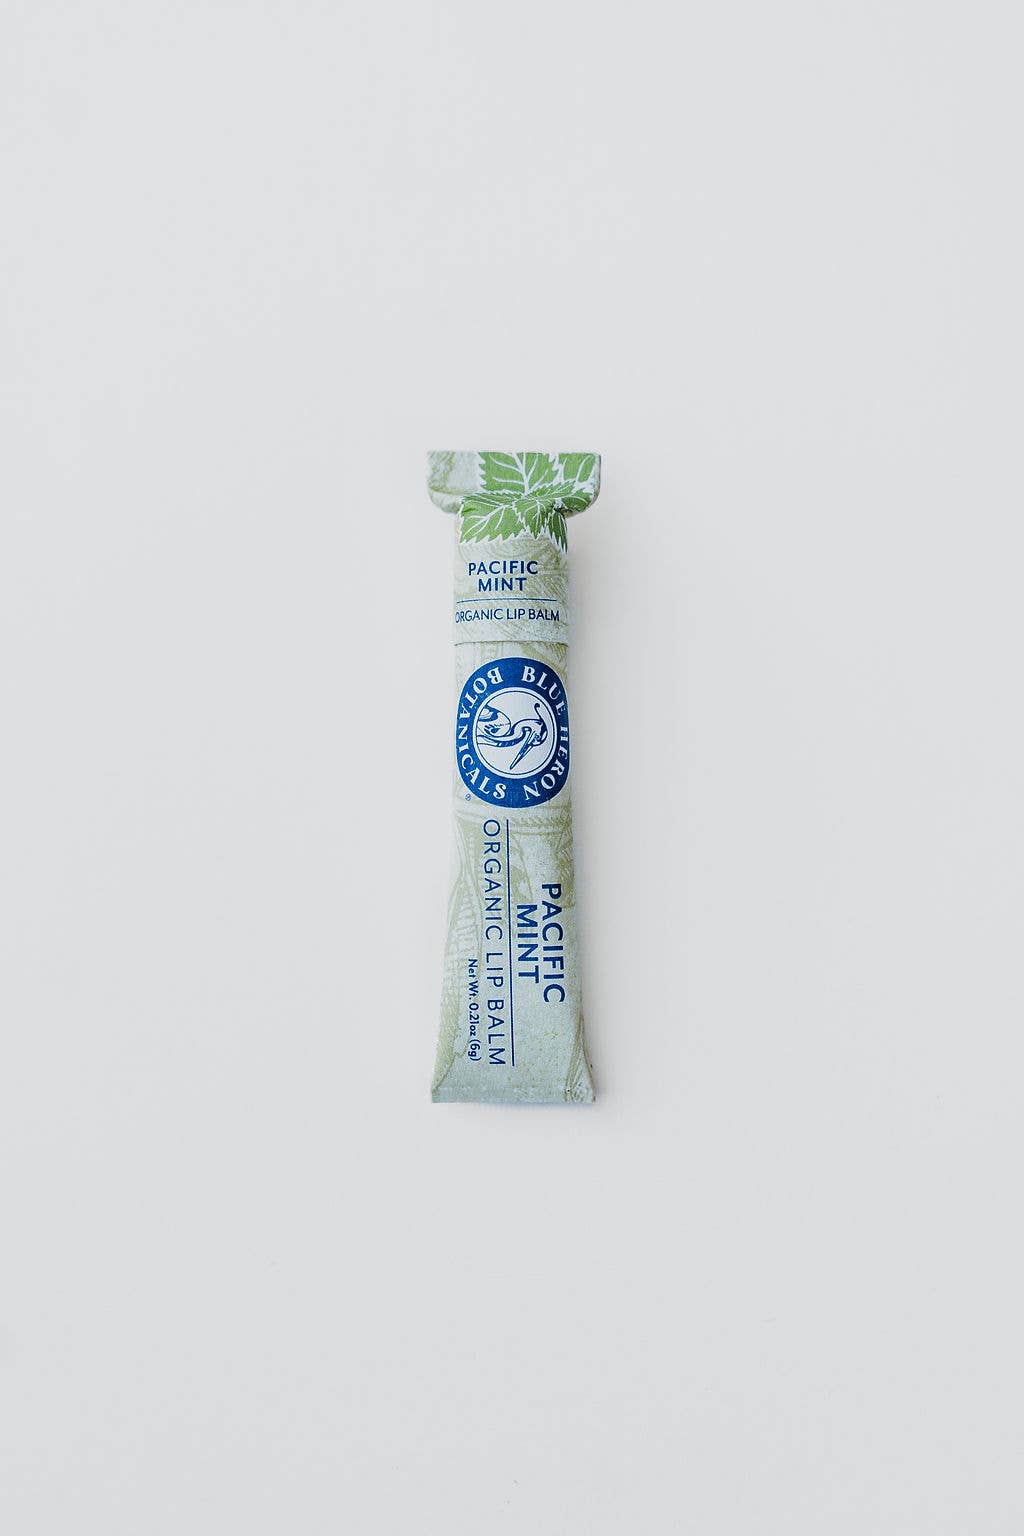 Blue Heron Botanicals - Organic Lip Balm - Pacific Mint